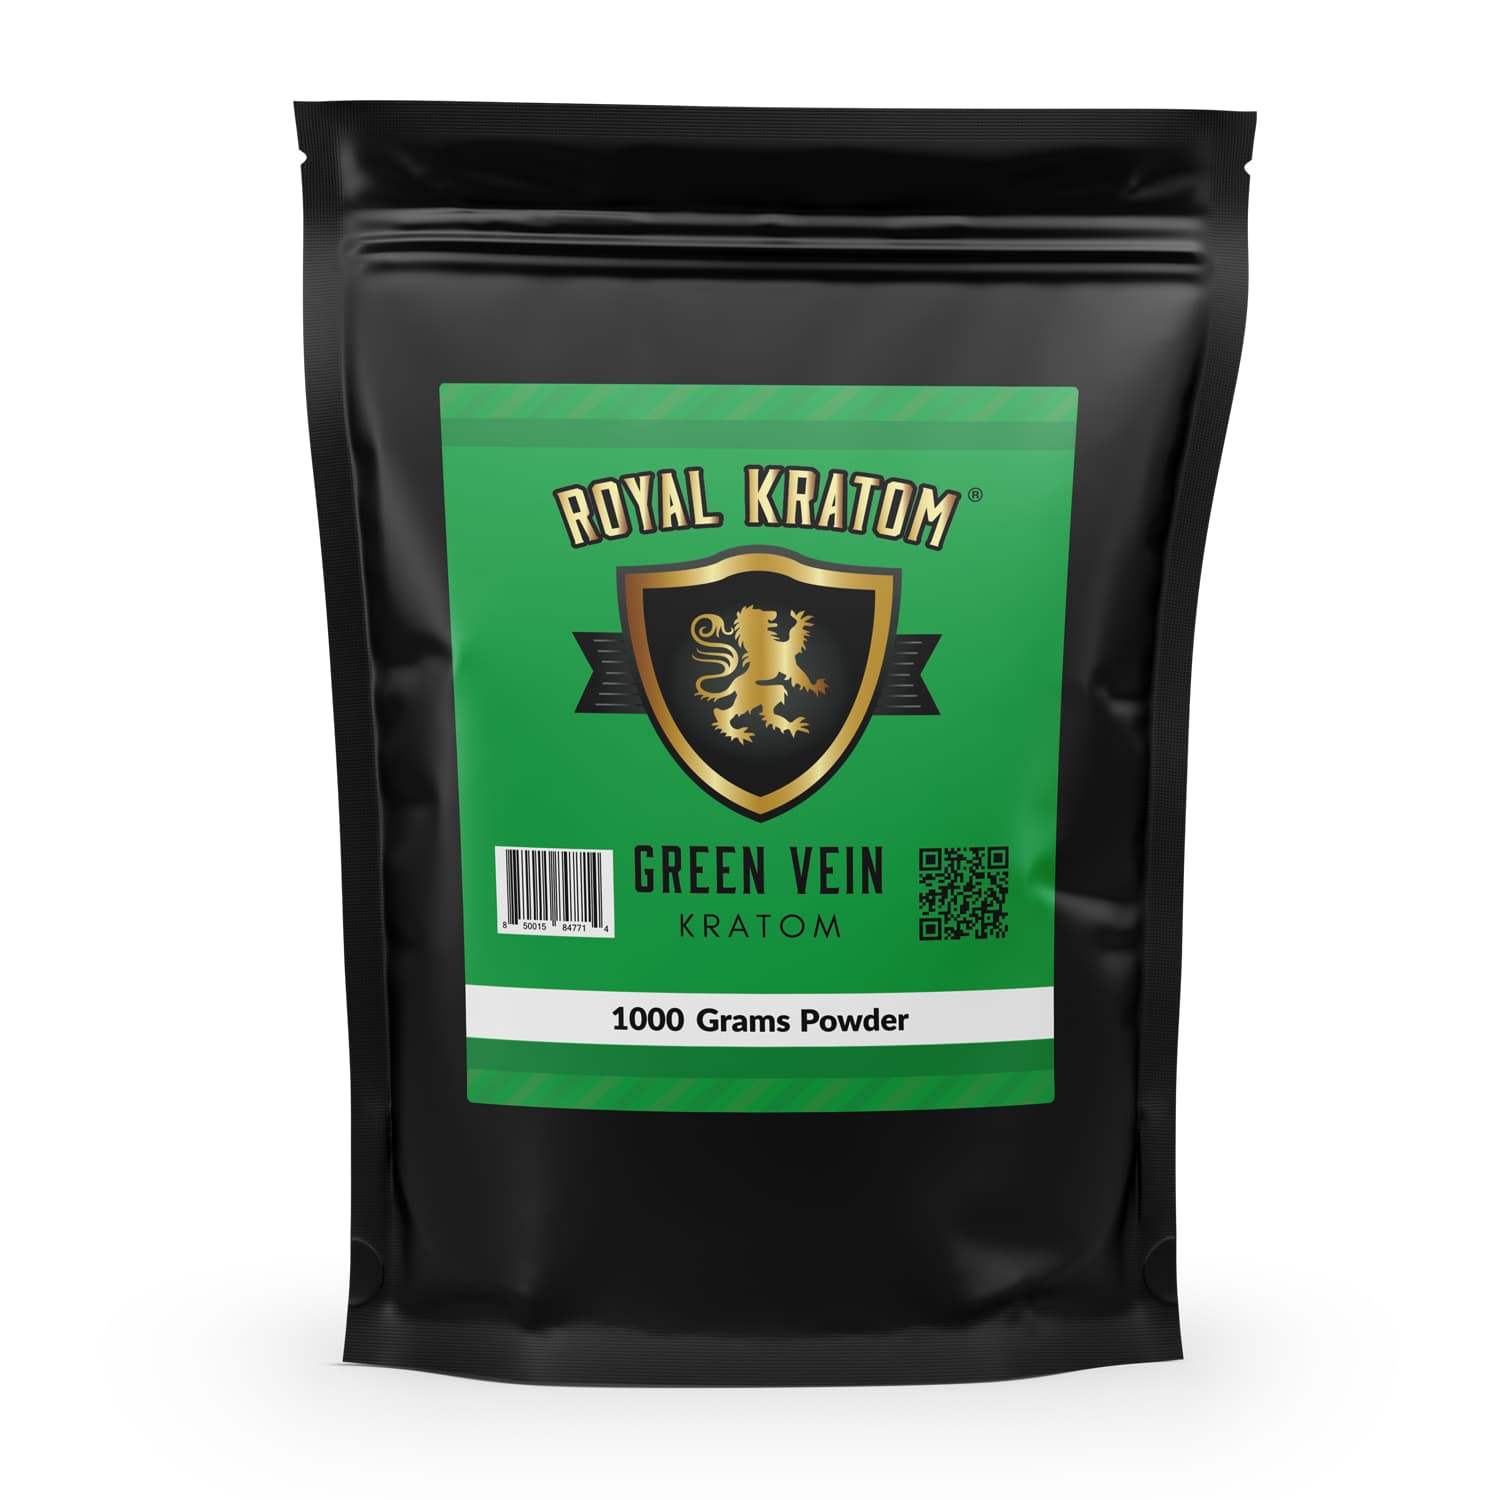 Royal Kratom green vein kratom powder 1000 grams kilo package